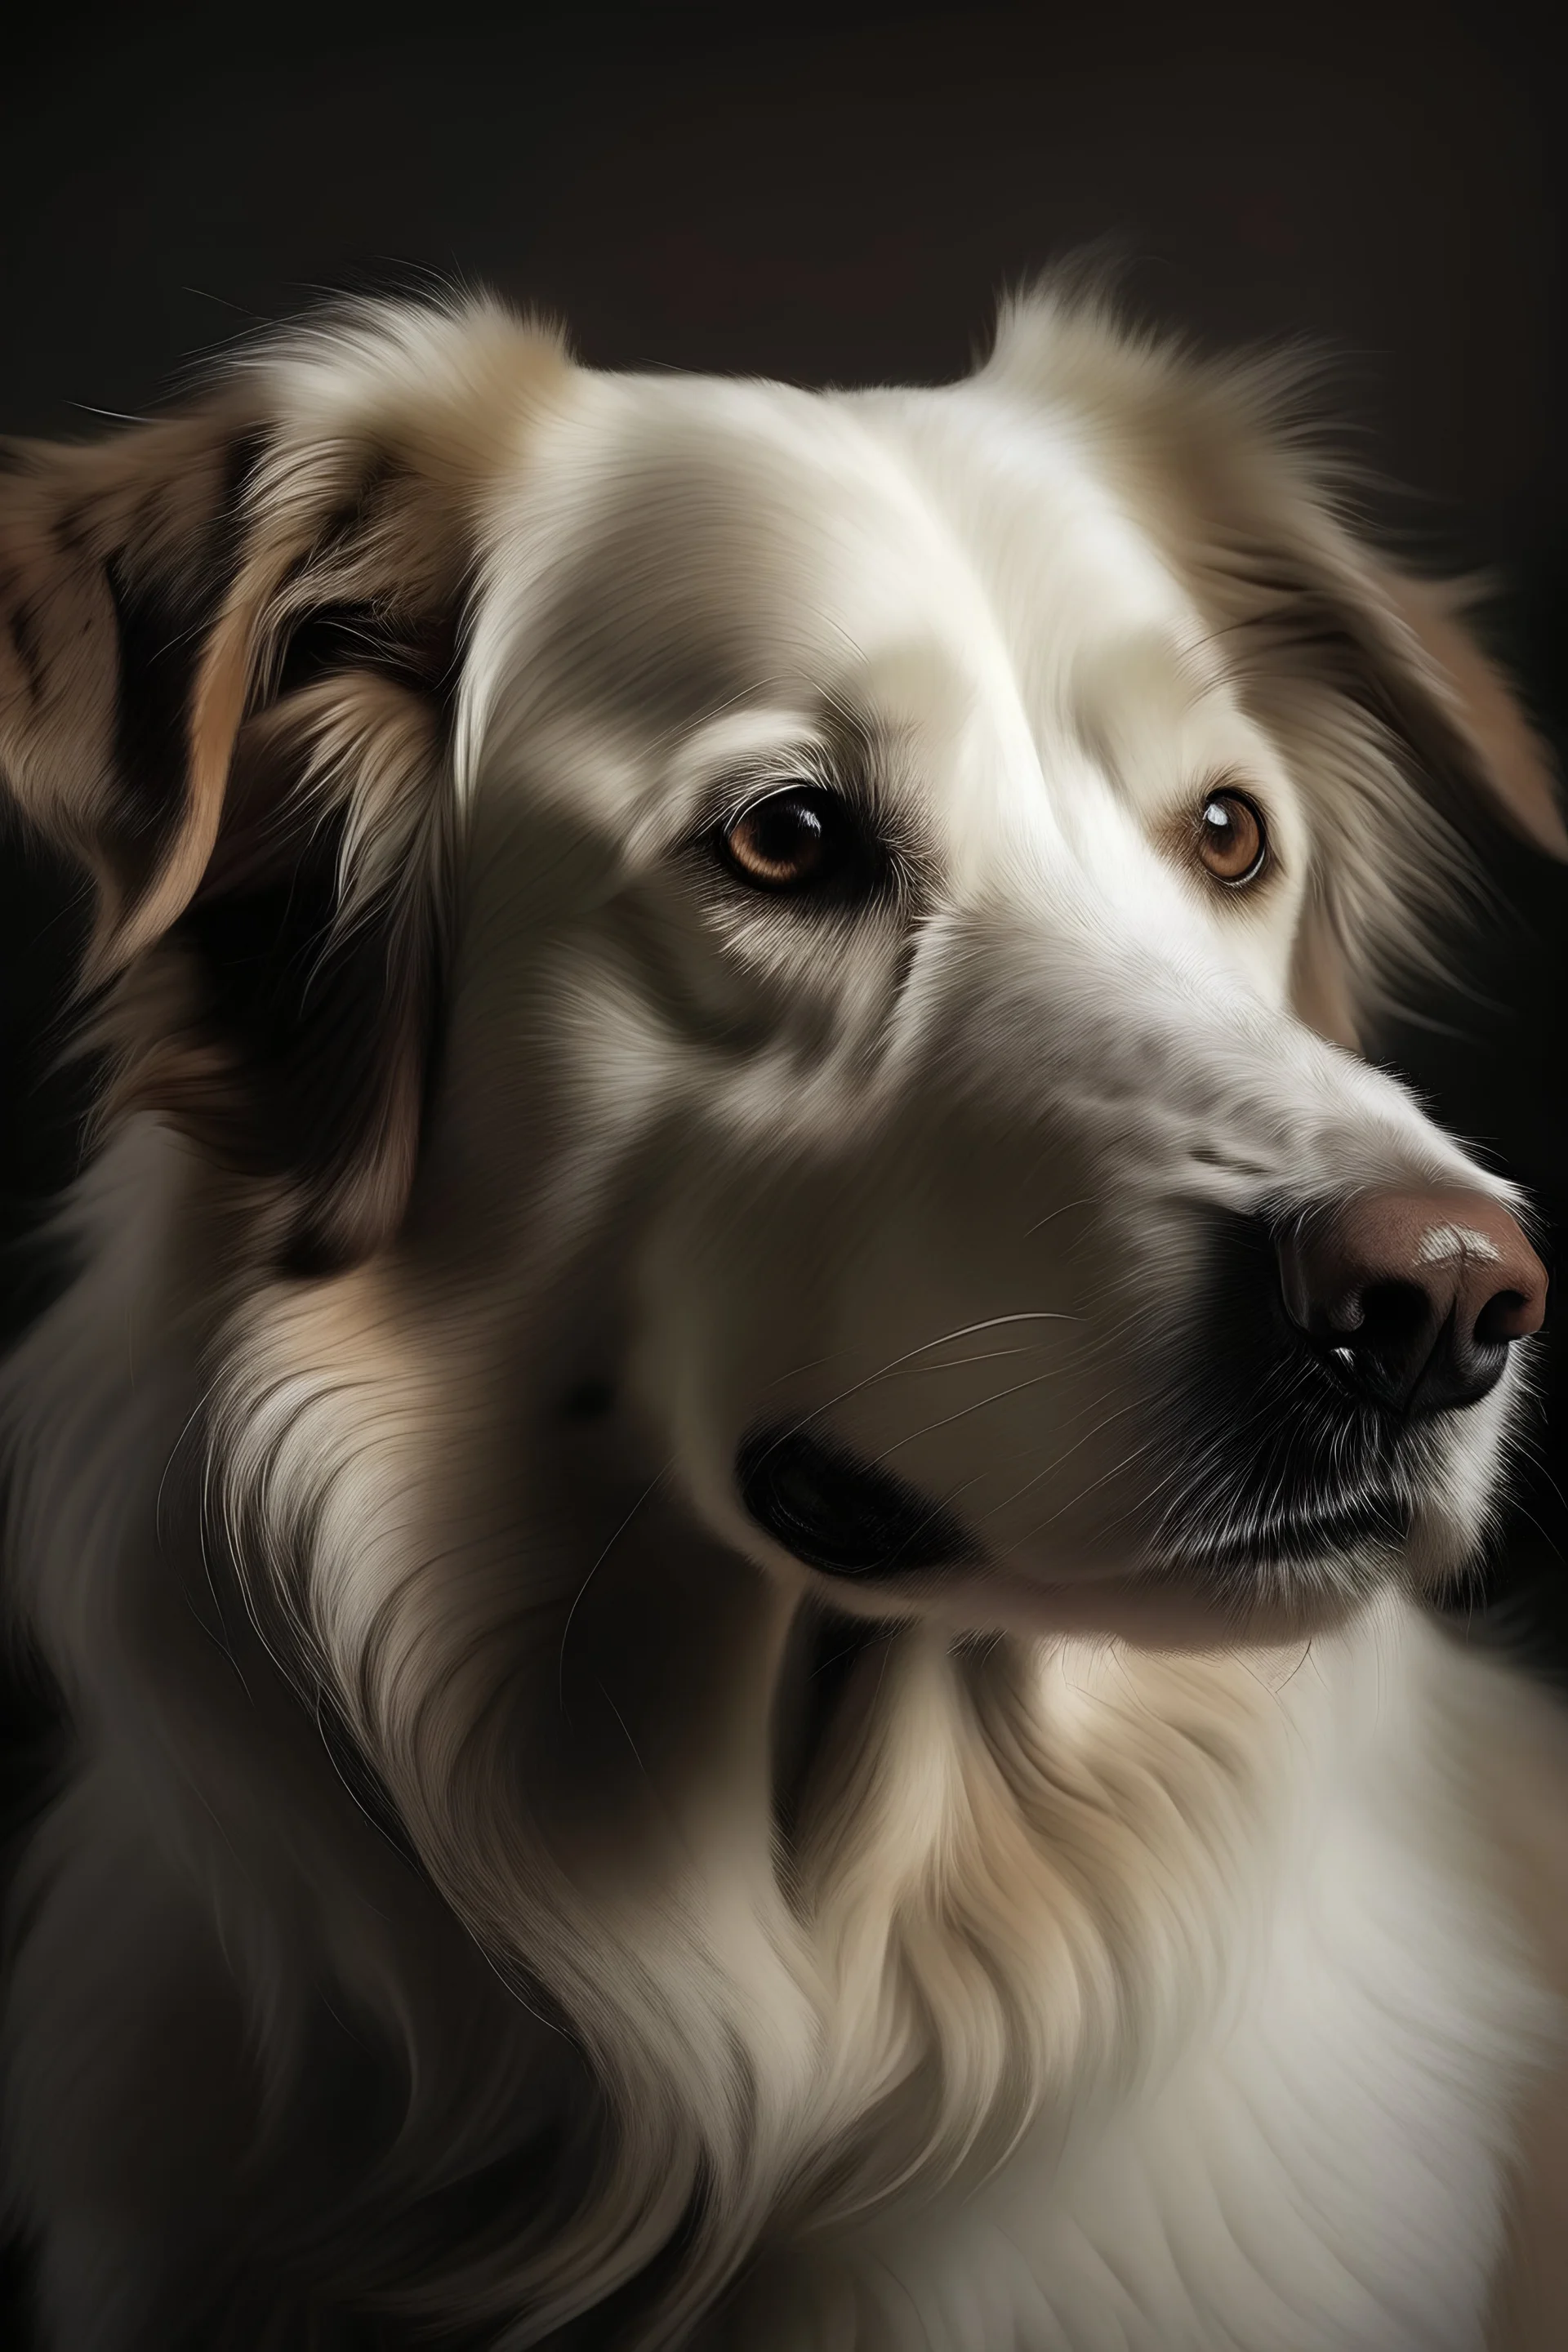 retrato de un perro van goh